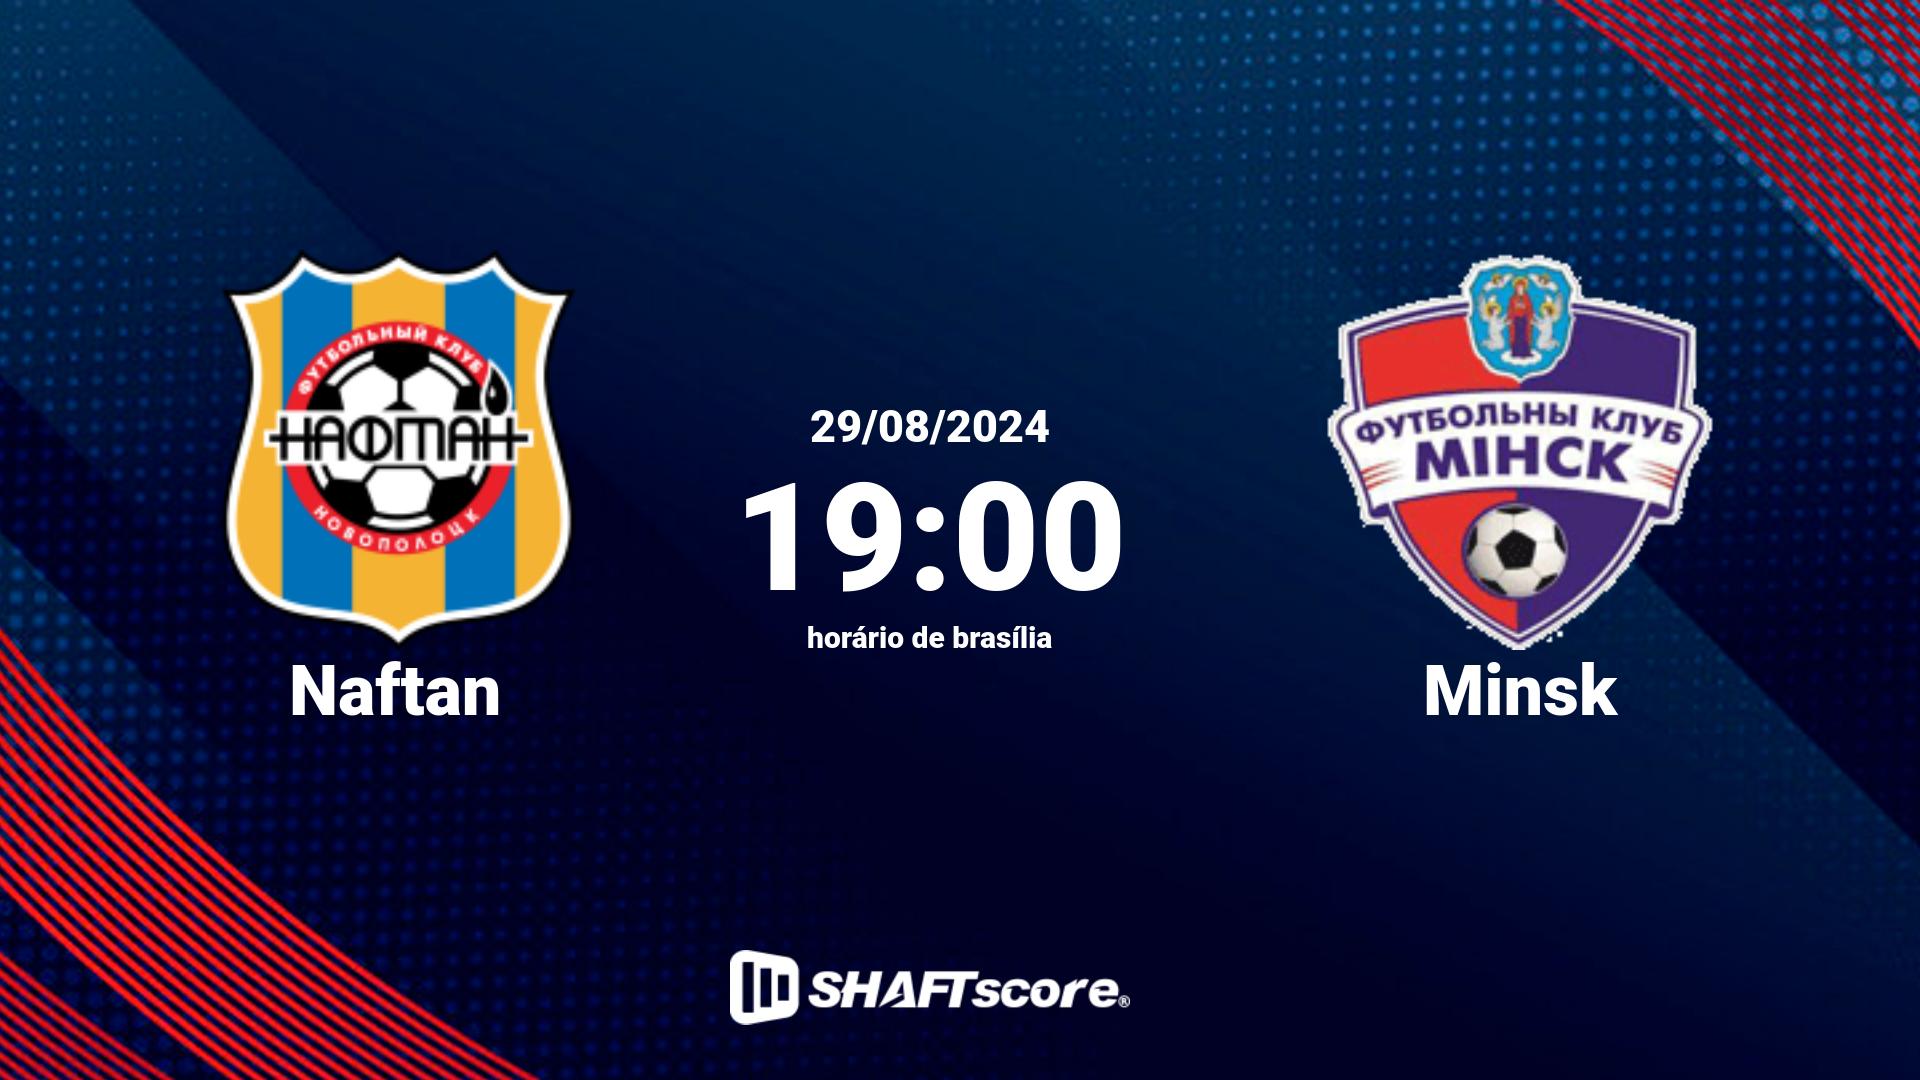 Estatísticas do jogo Naftan vs Minsk 29.08 19:00